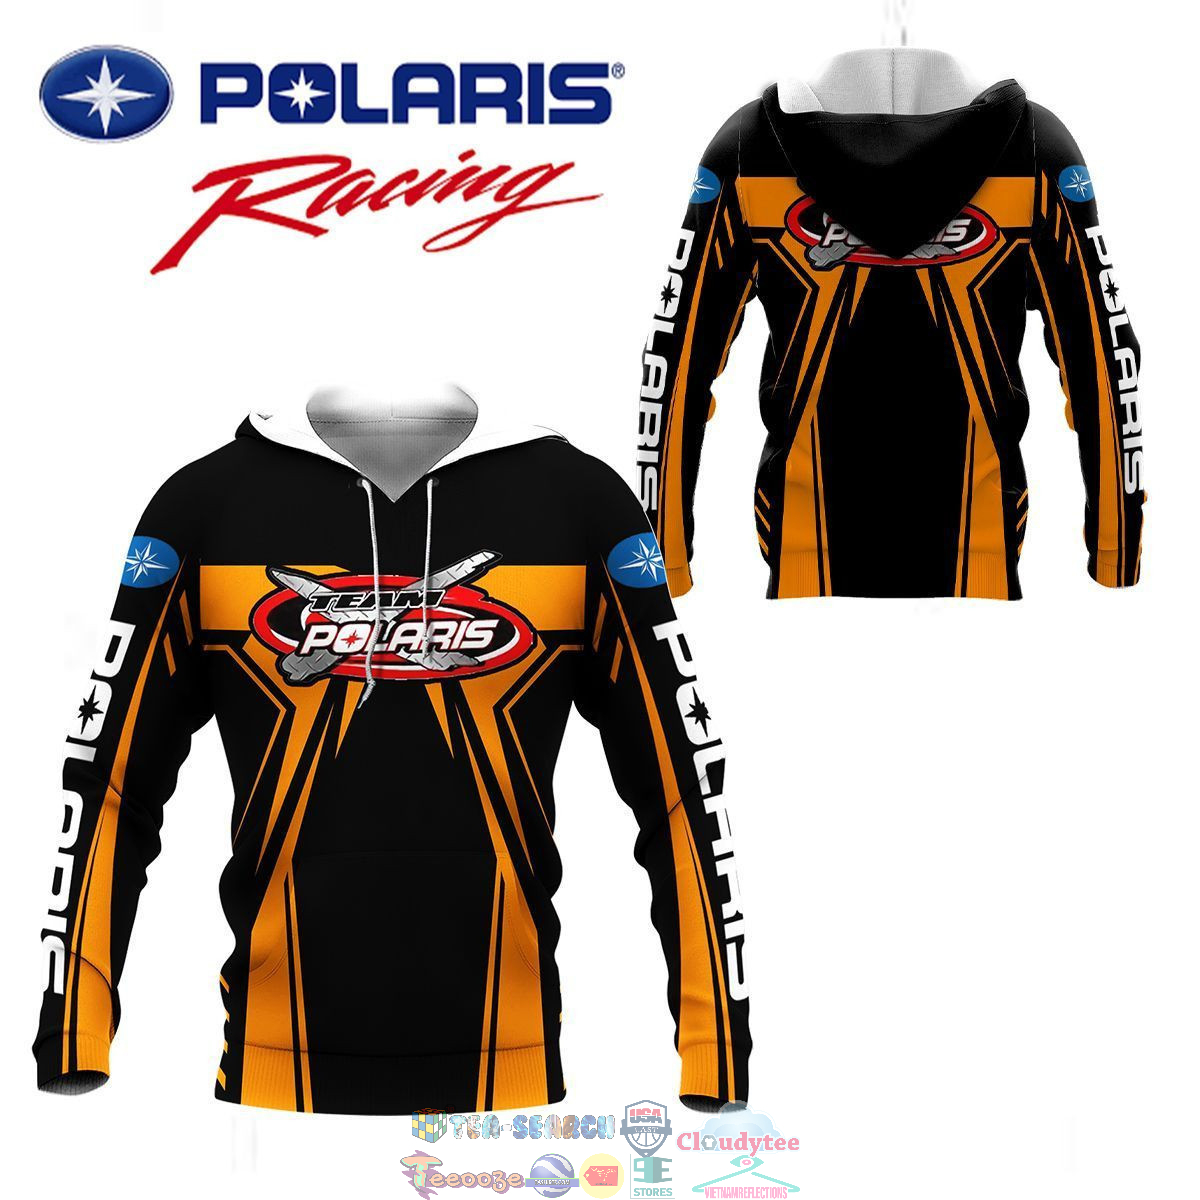 Polaris Racing Team ver 1 3D hoodie and t-shirt – Saleoff